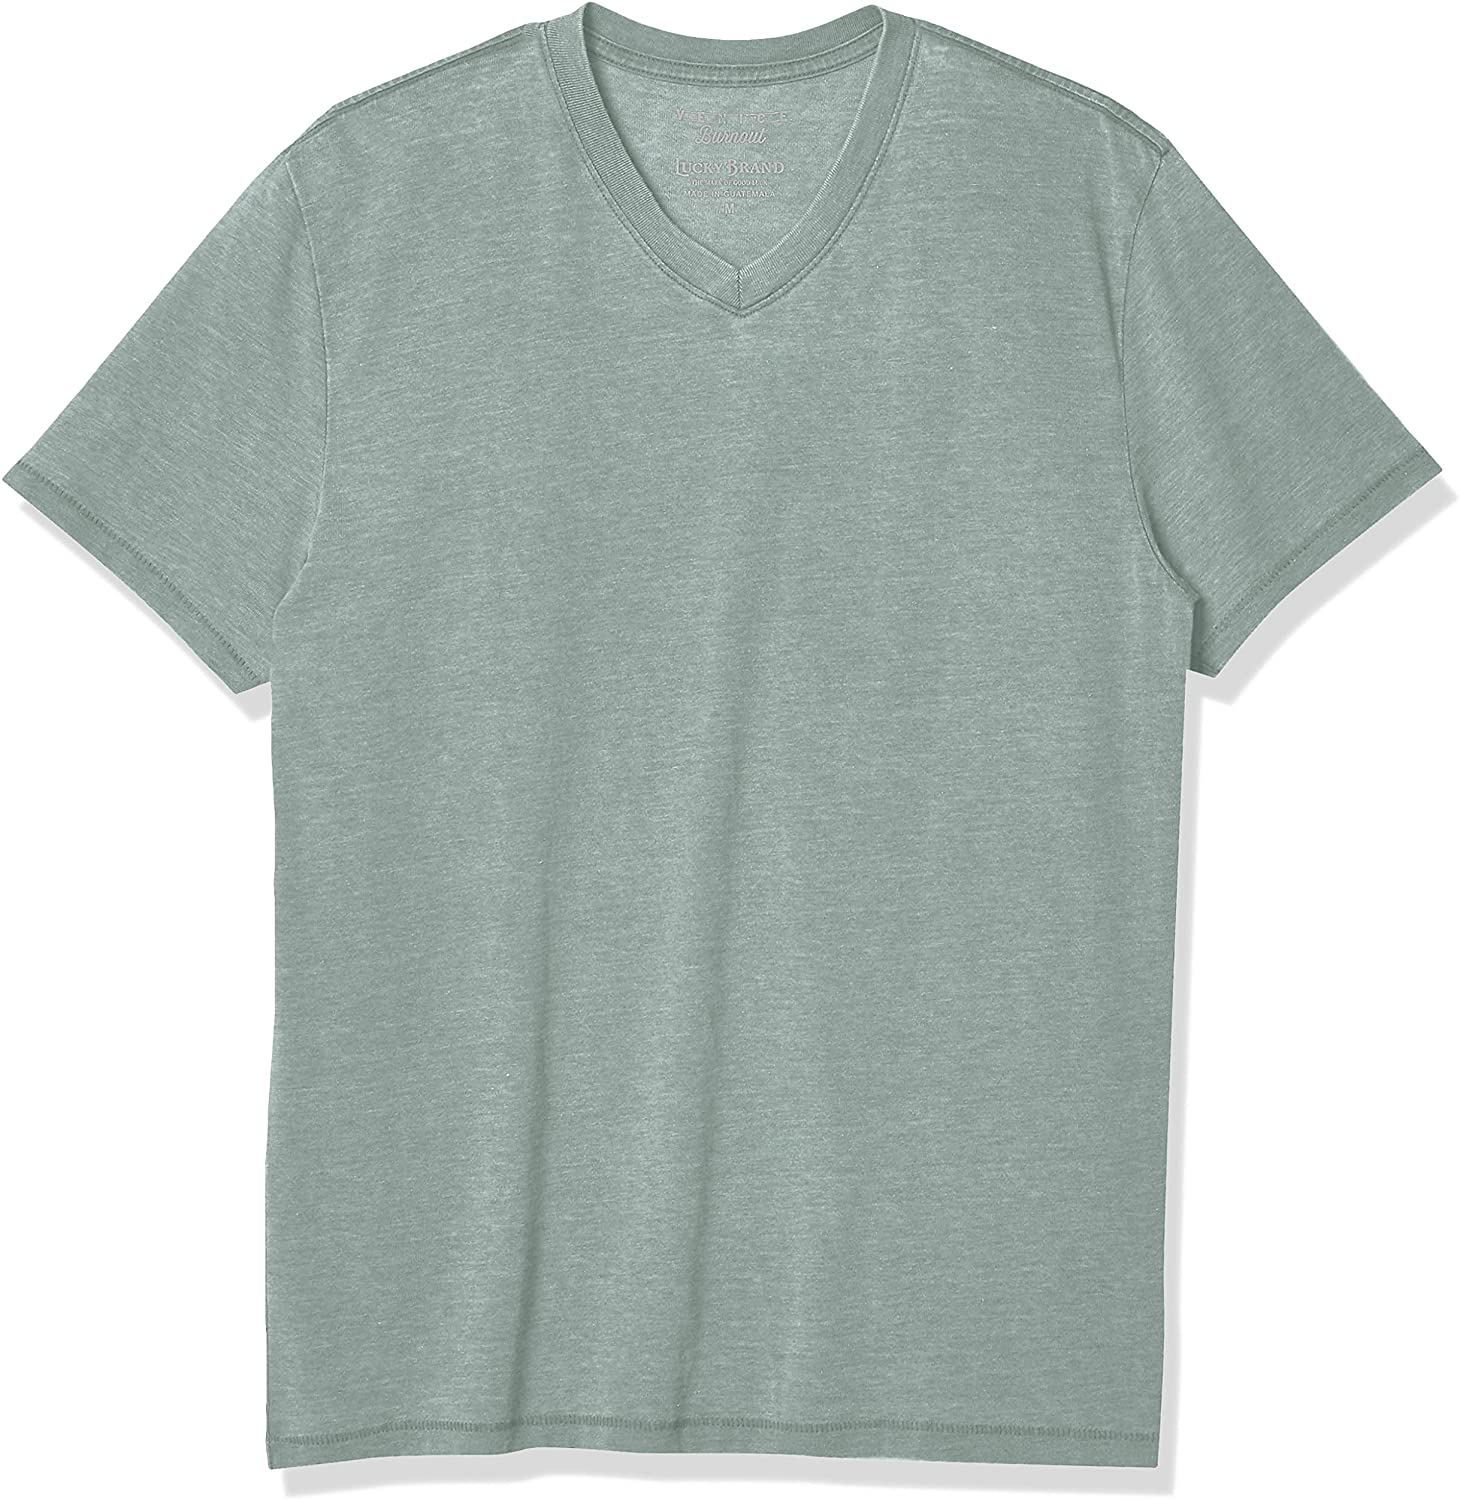 Clothing] Lucky Brand Men's Venice Burnout V-neck Tee $9.99 :  r/ofDeals